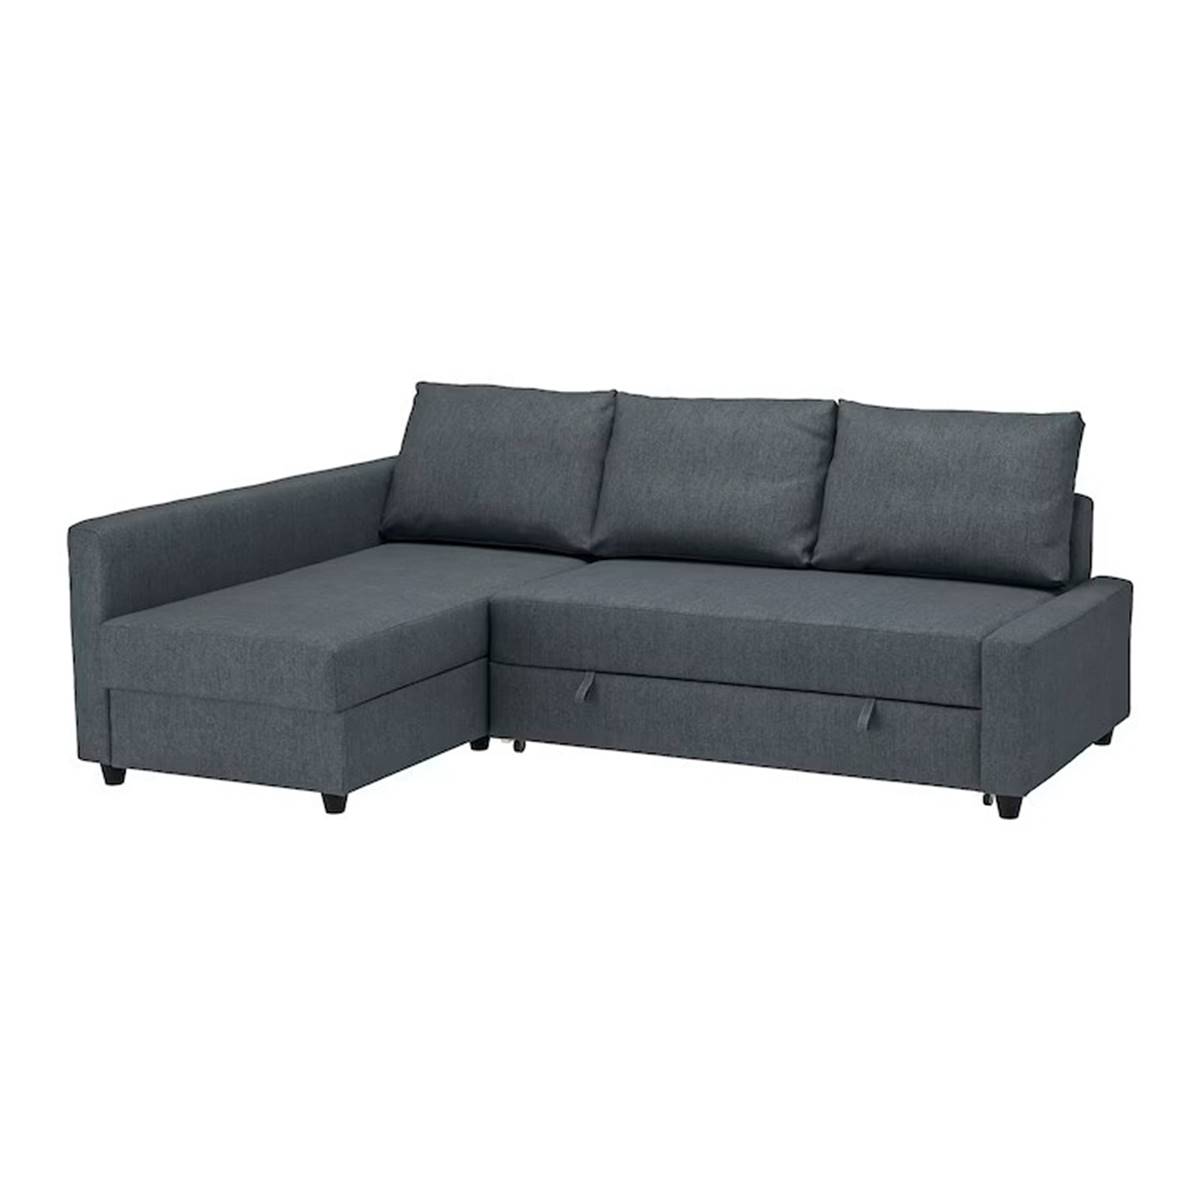 Sofá cama Friheten en color gris de IKEA. 